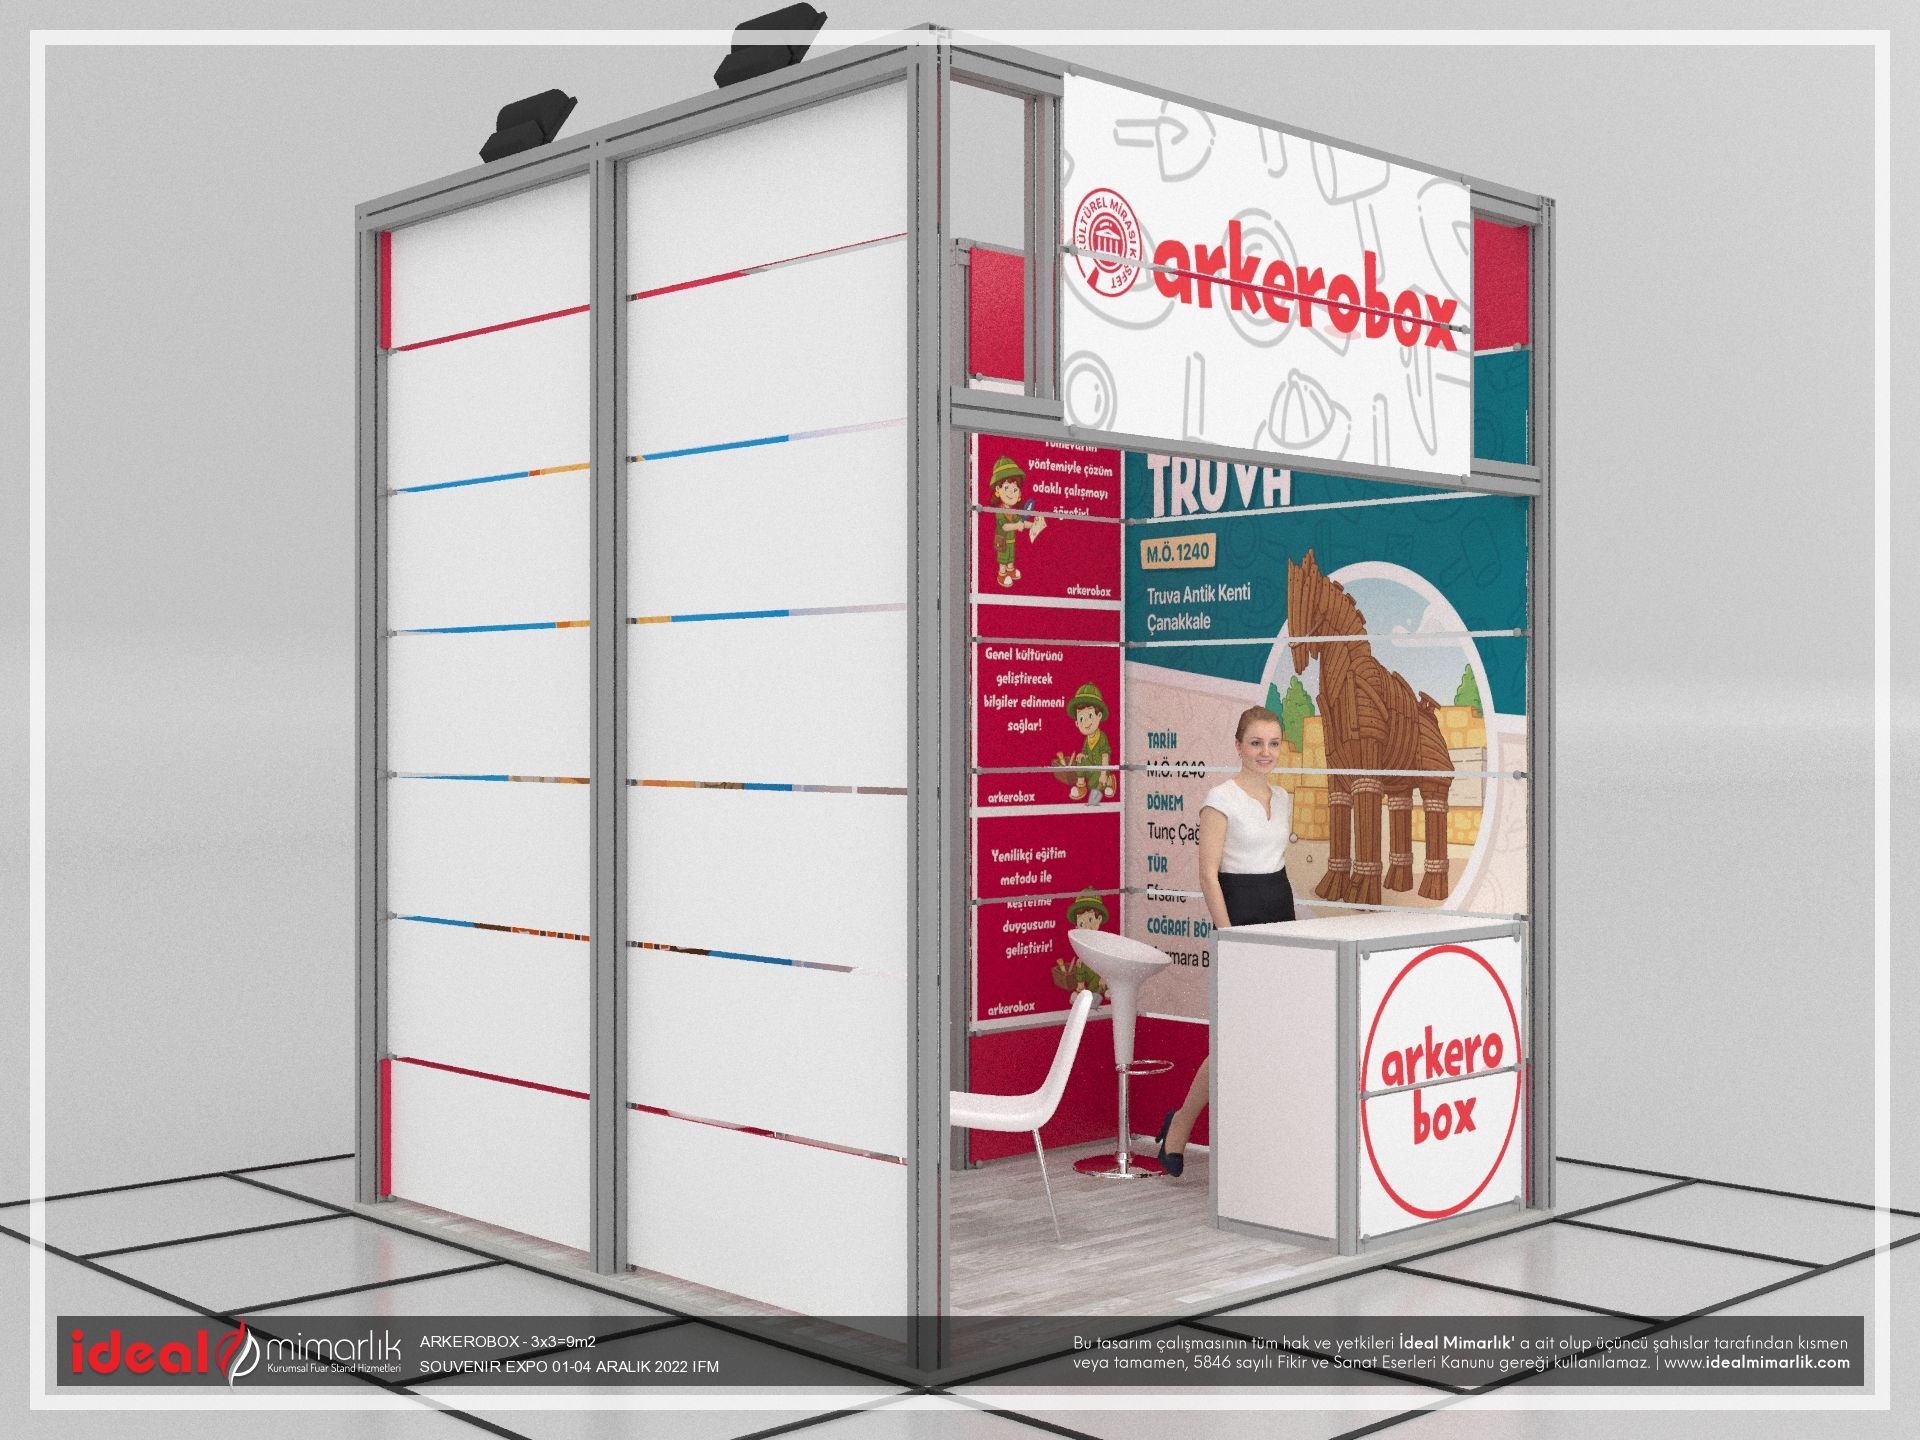 ARKEROBOX |SOUVENIR EXPO 01-04 ARALIK 2022 IFM